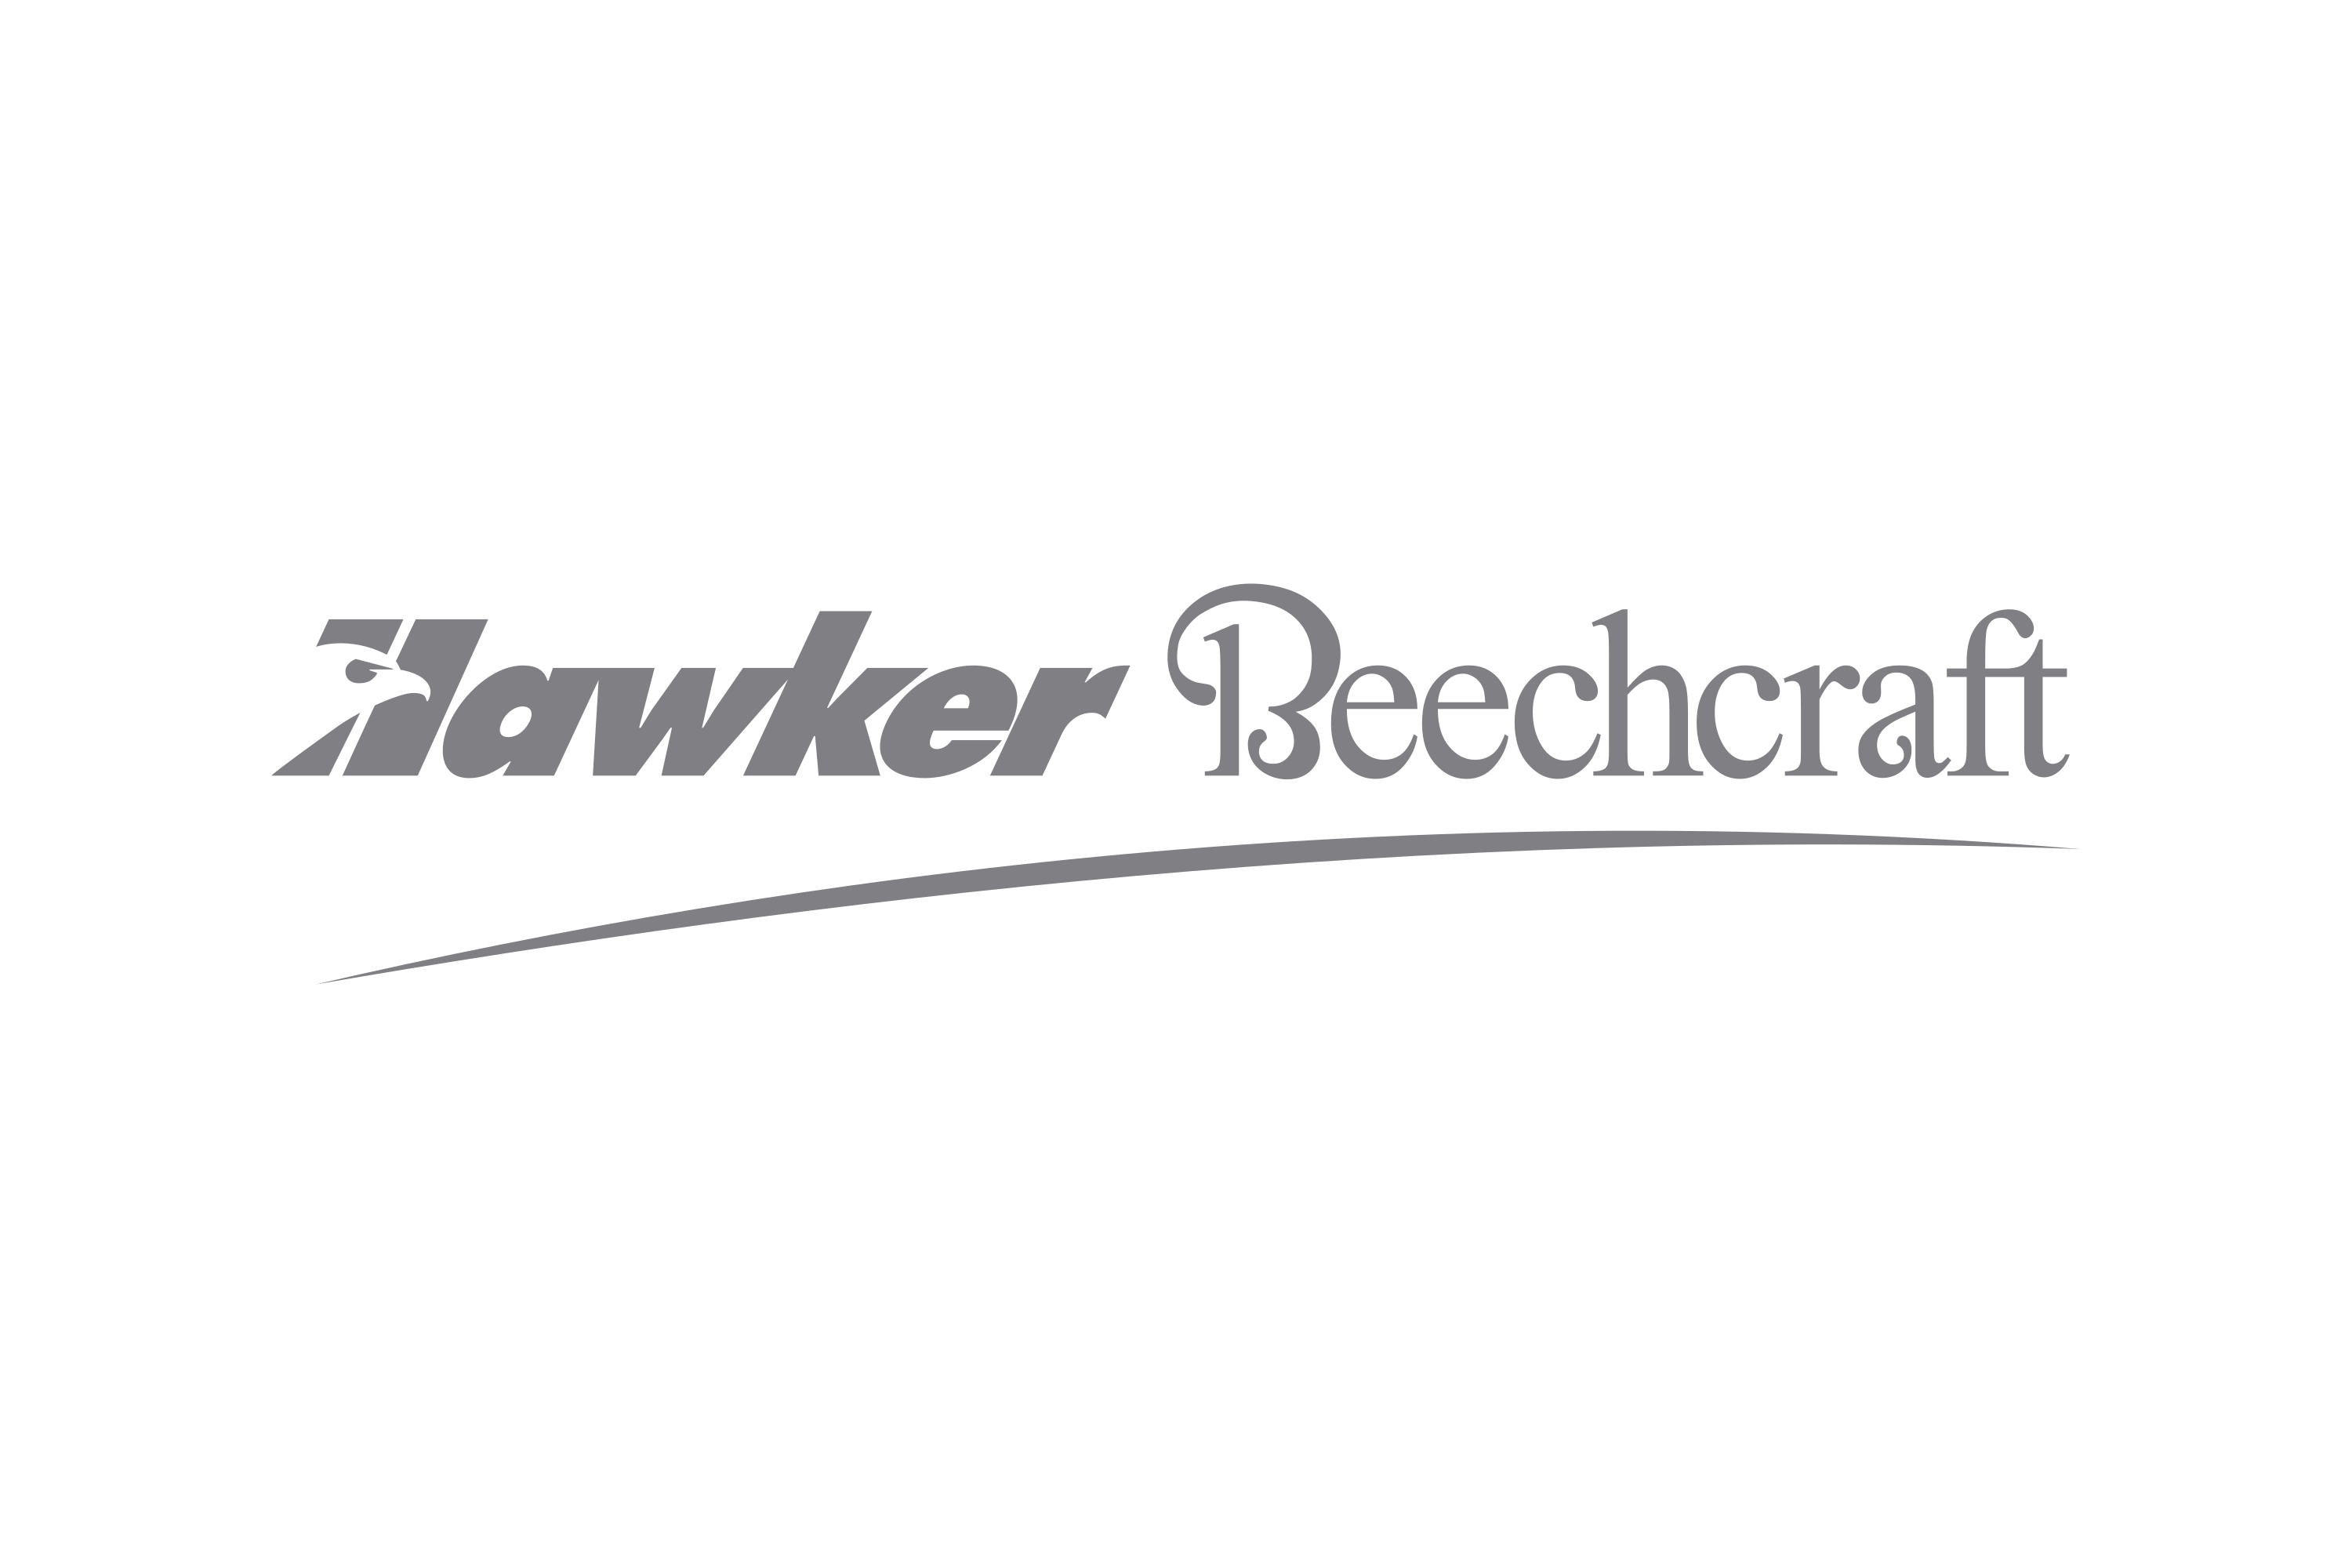 Download Hawker Beechcraft Logo in SVG Vector or PNG File Format - Logo